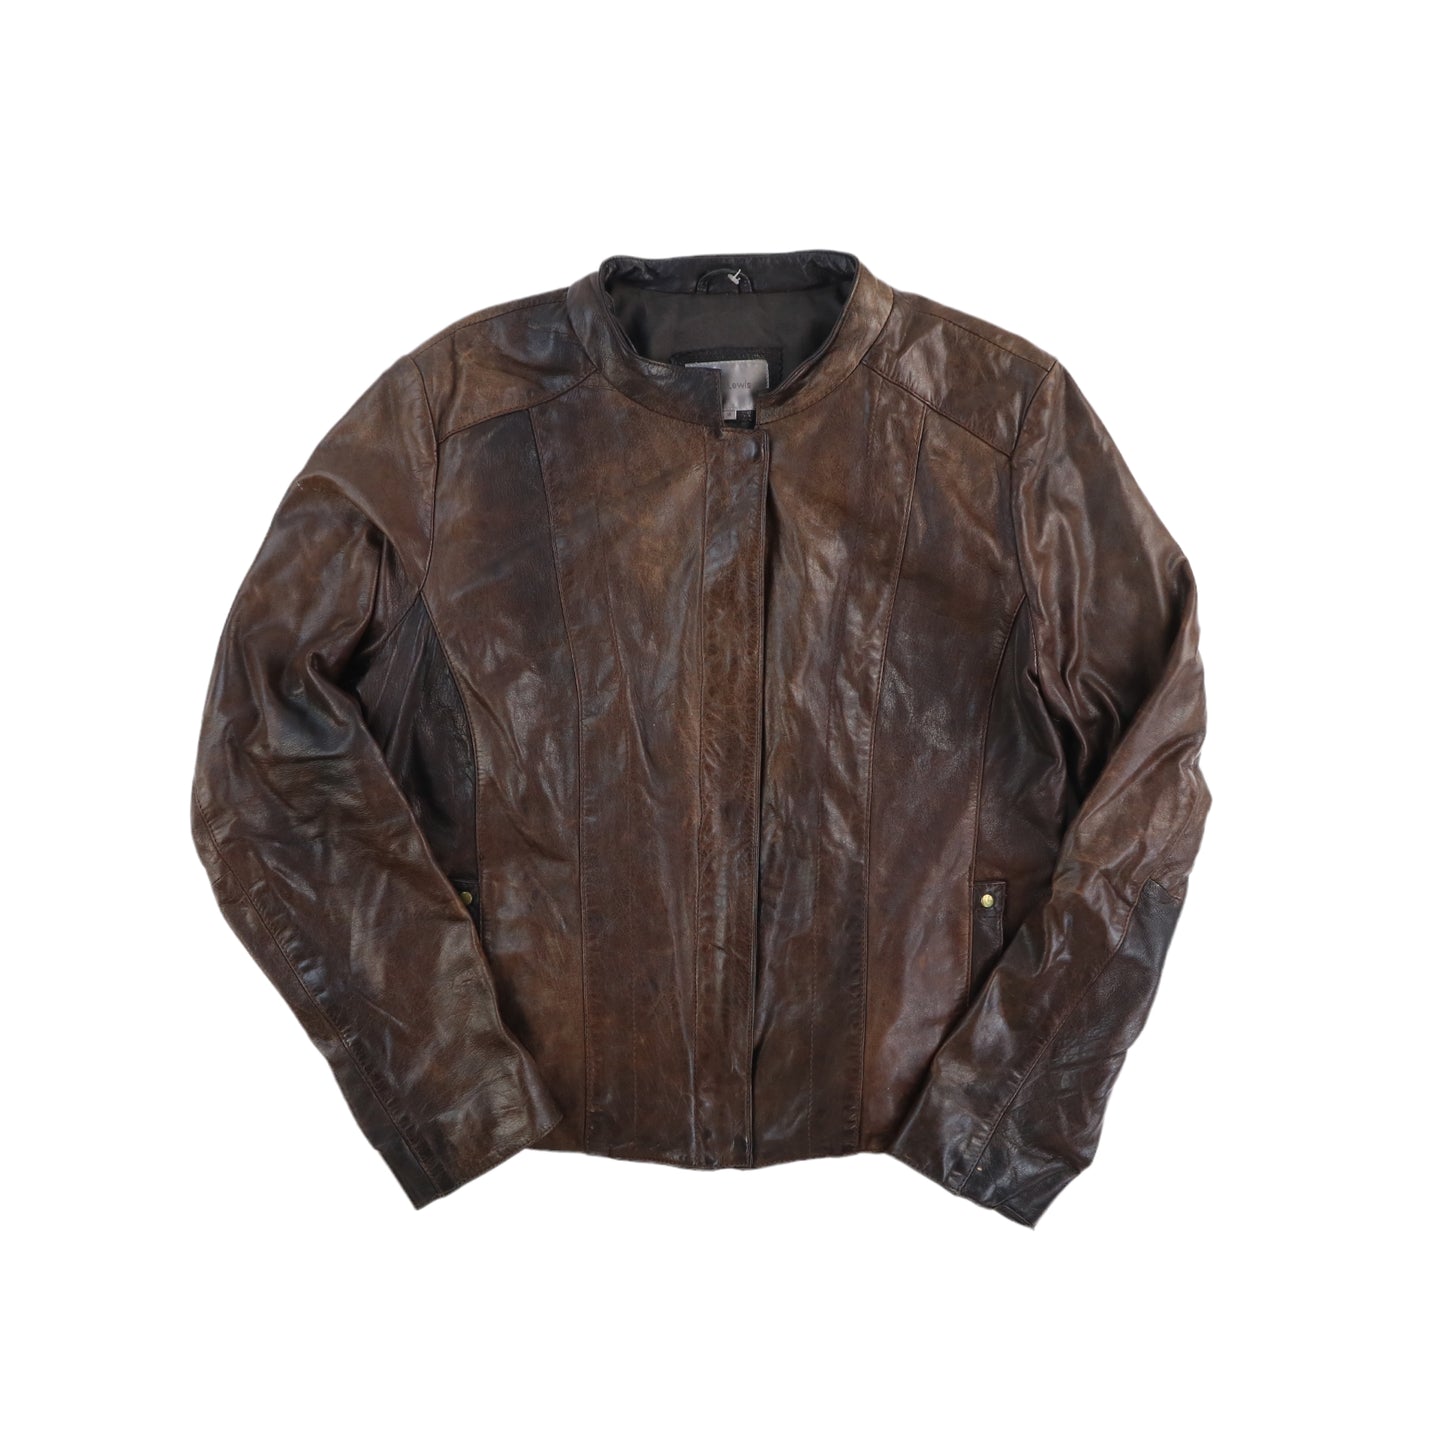 John Lewis Leather Jacket (L)